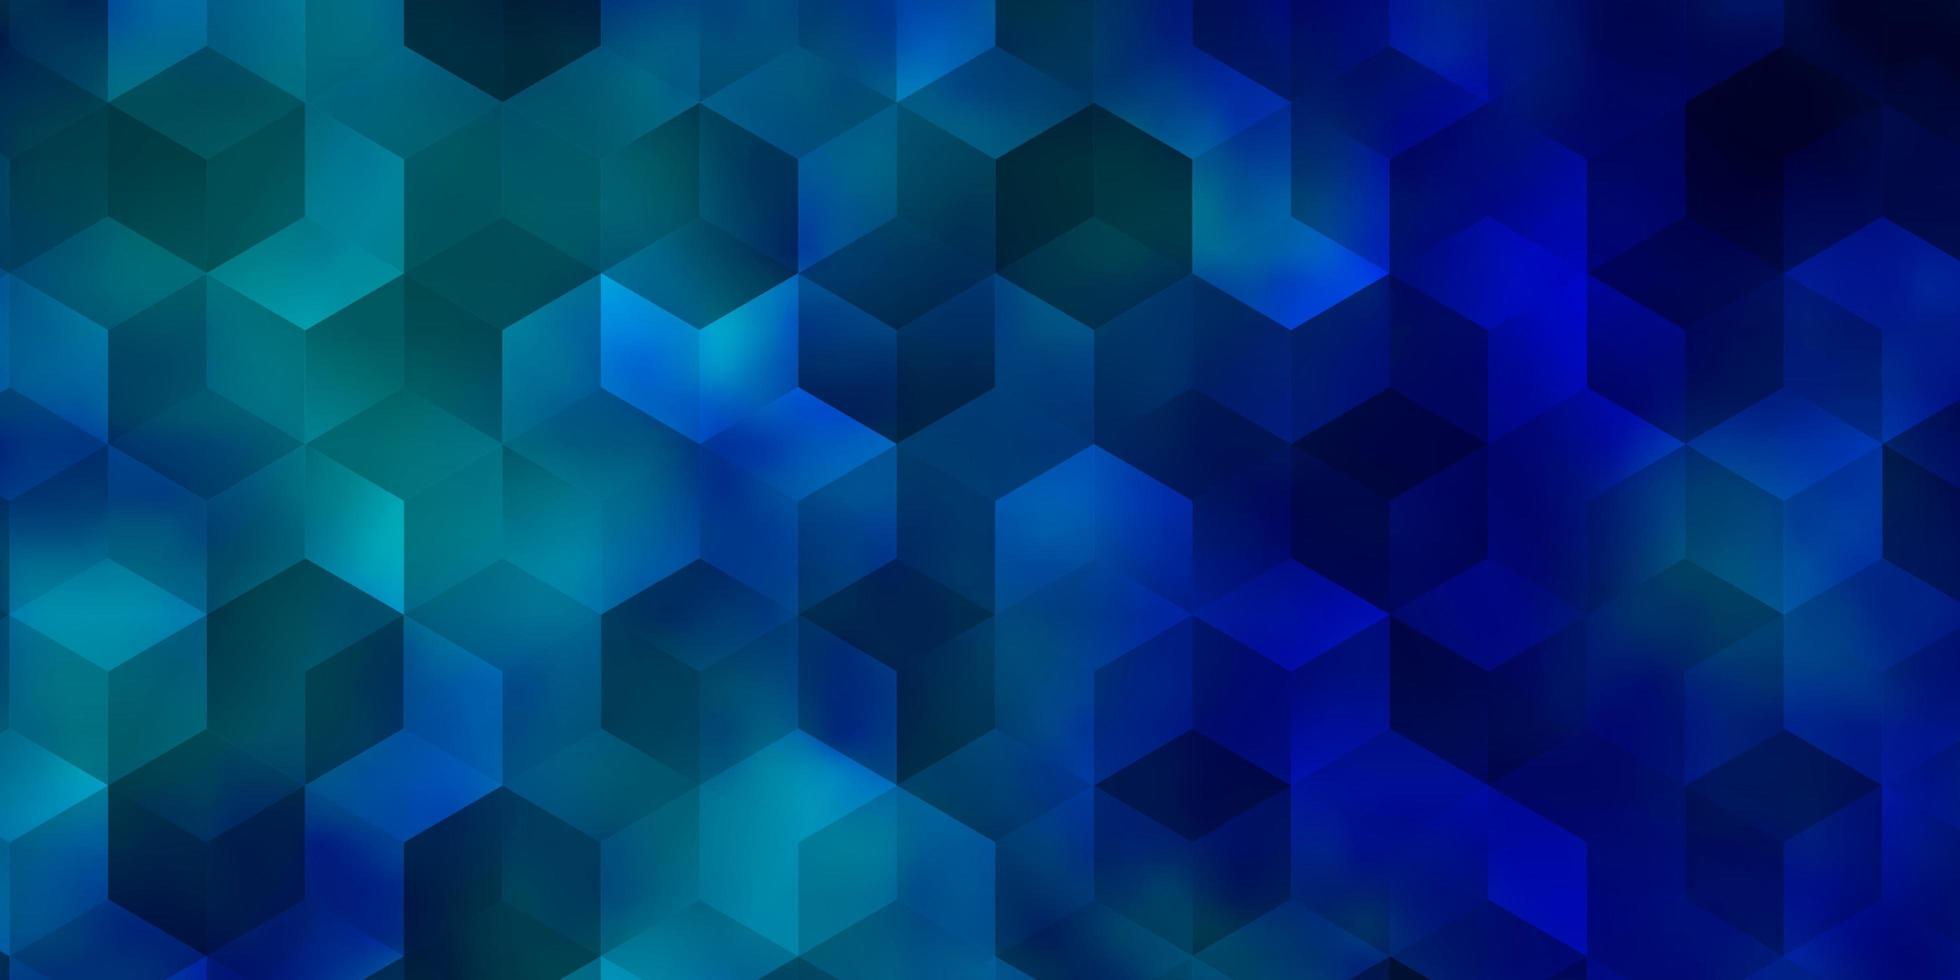 motif vectoriel bleu clair avec des hexagones colorés